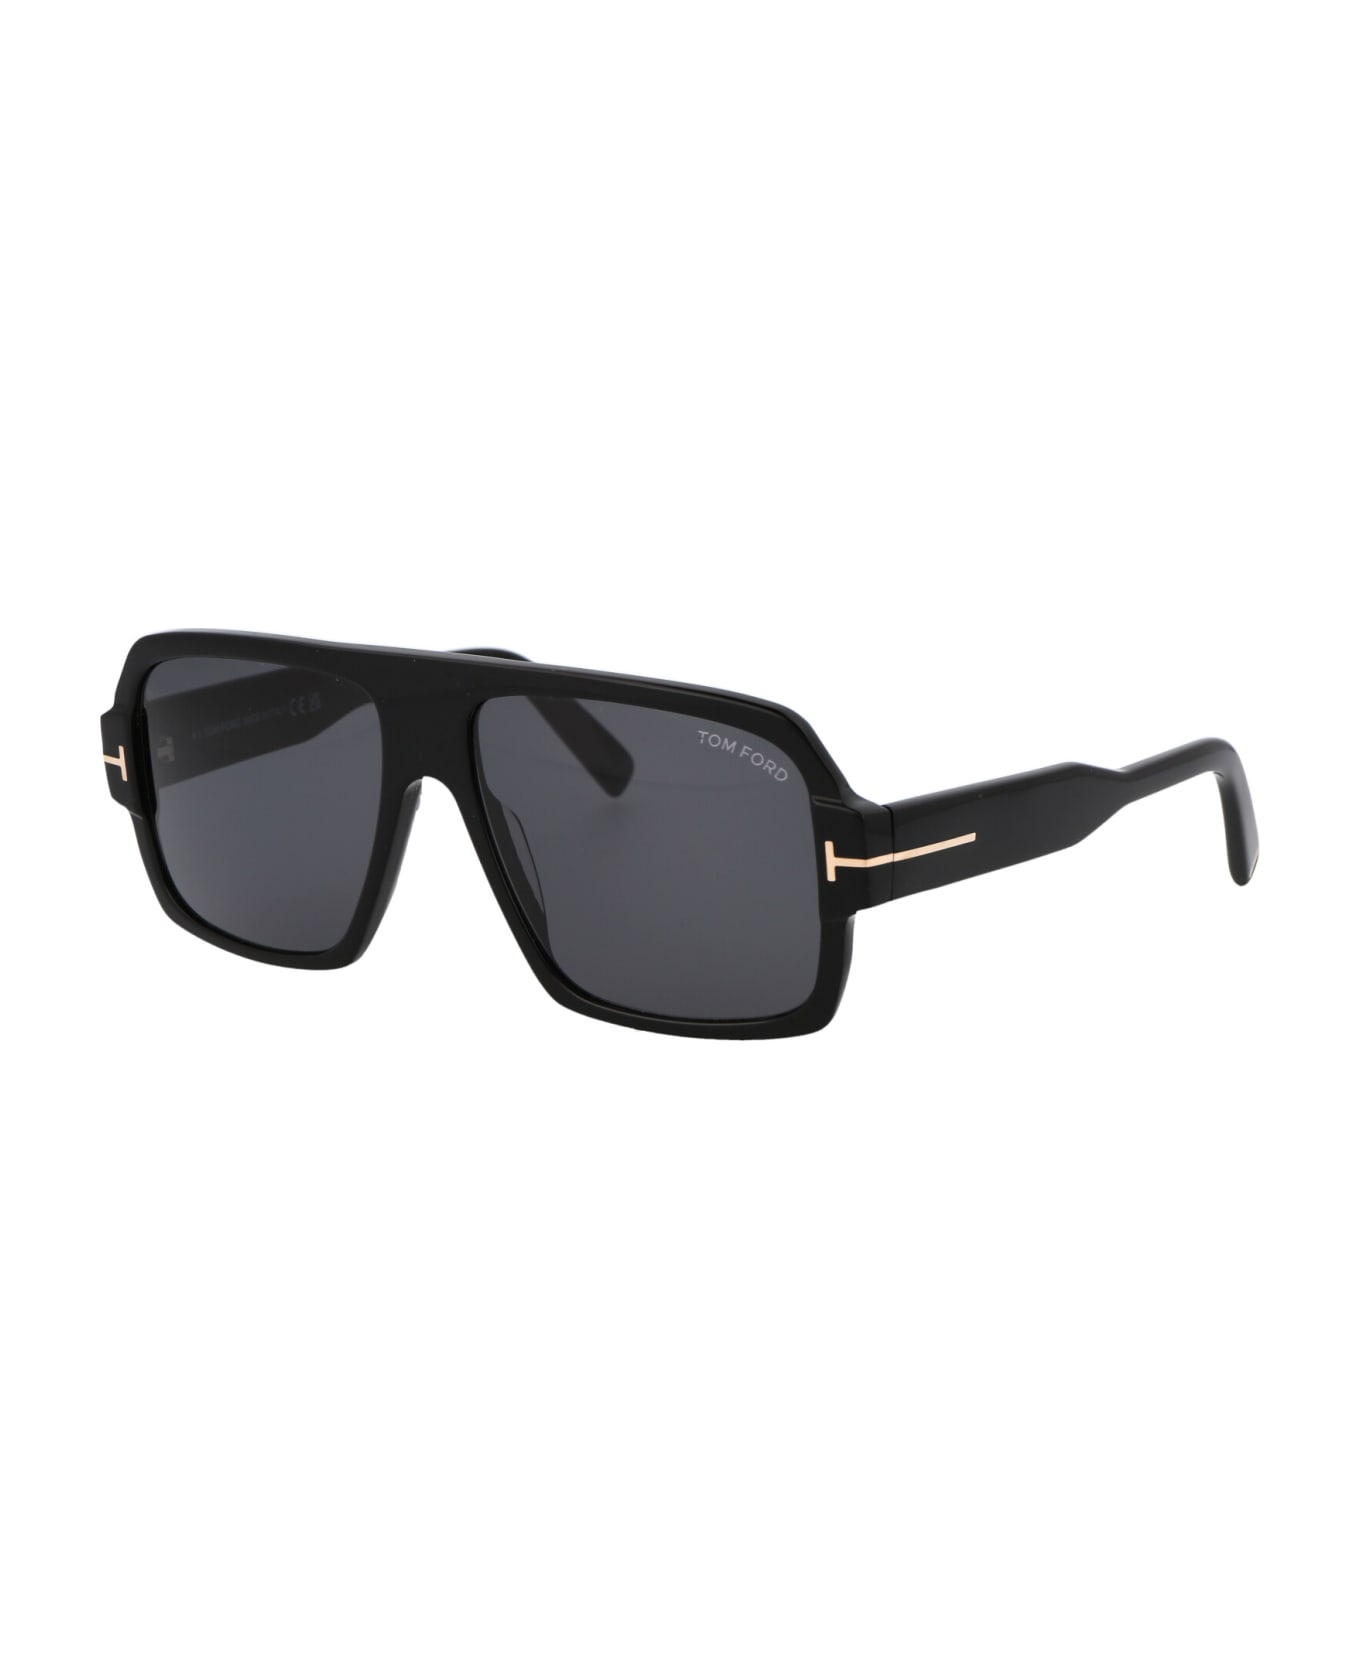 Tom Ford Eyewear Camden Sunglasses - 01A Nero Lucido / Fumo